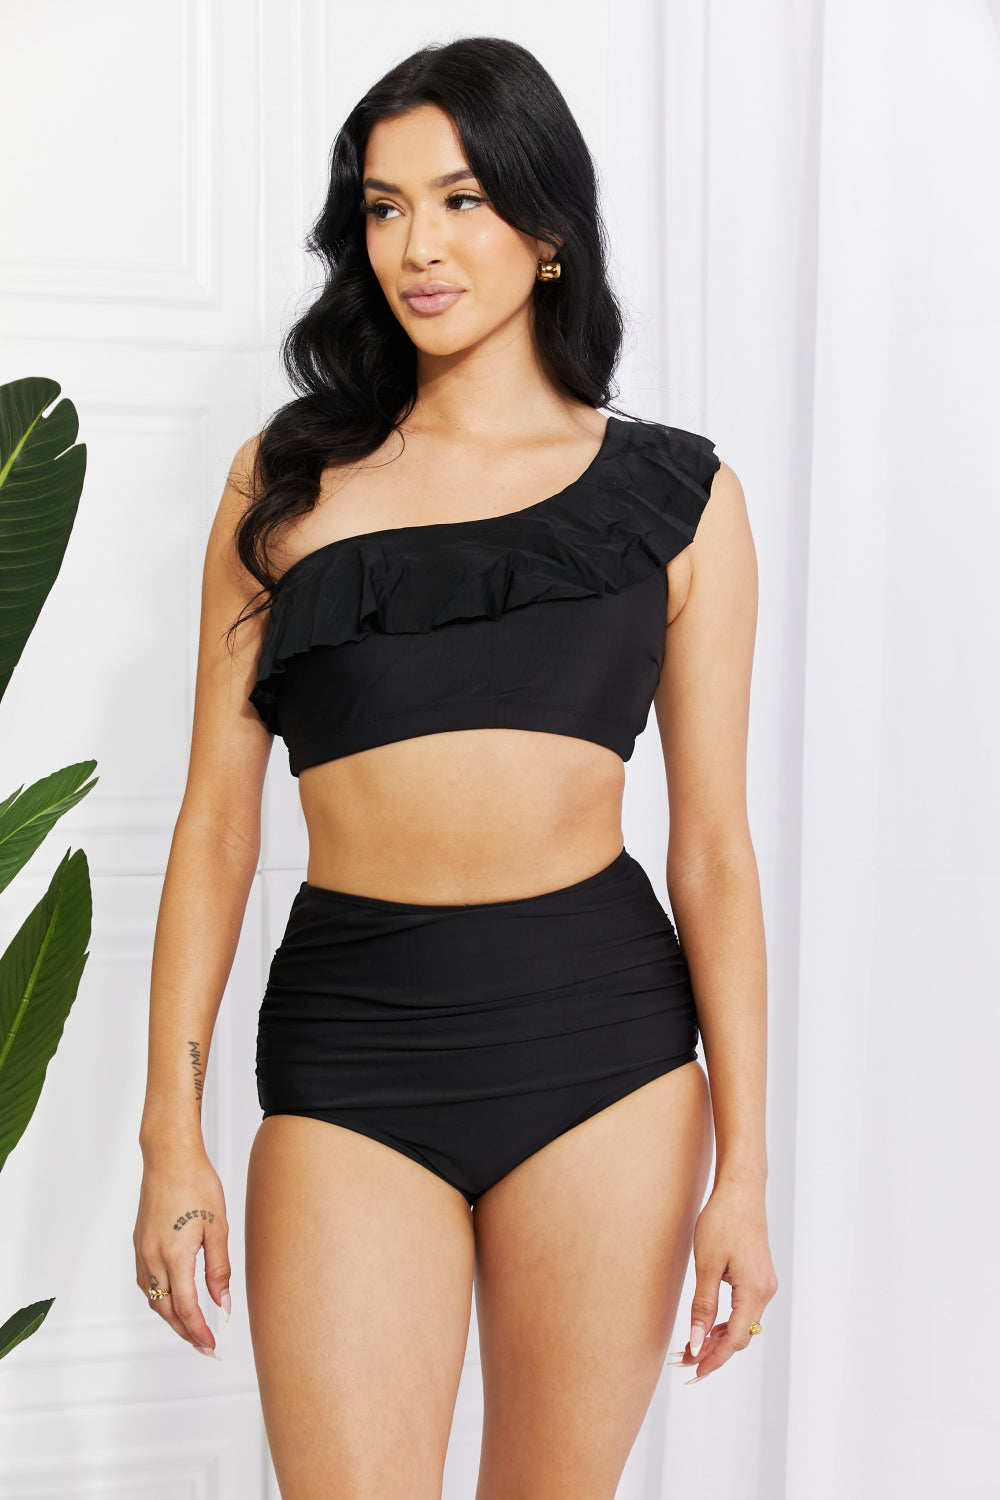 Marina West Swim Seaside Romance Ruffle One-Shoulder Bikini in Black free shipping -Oh Em Gee Boutique